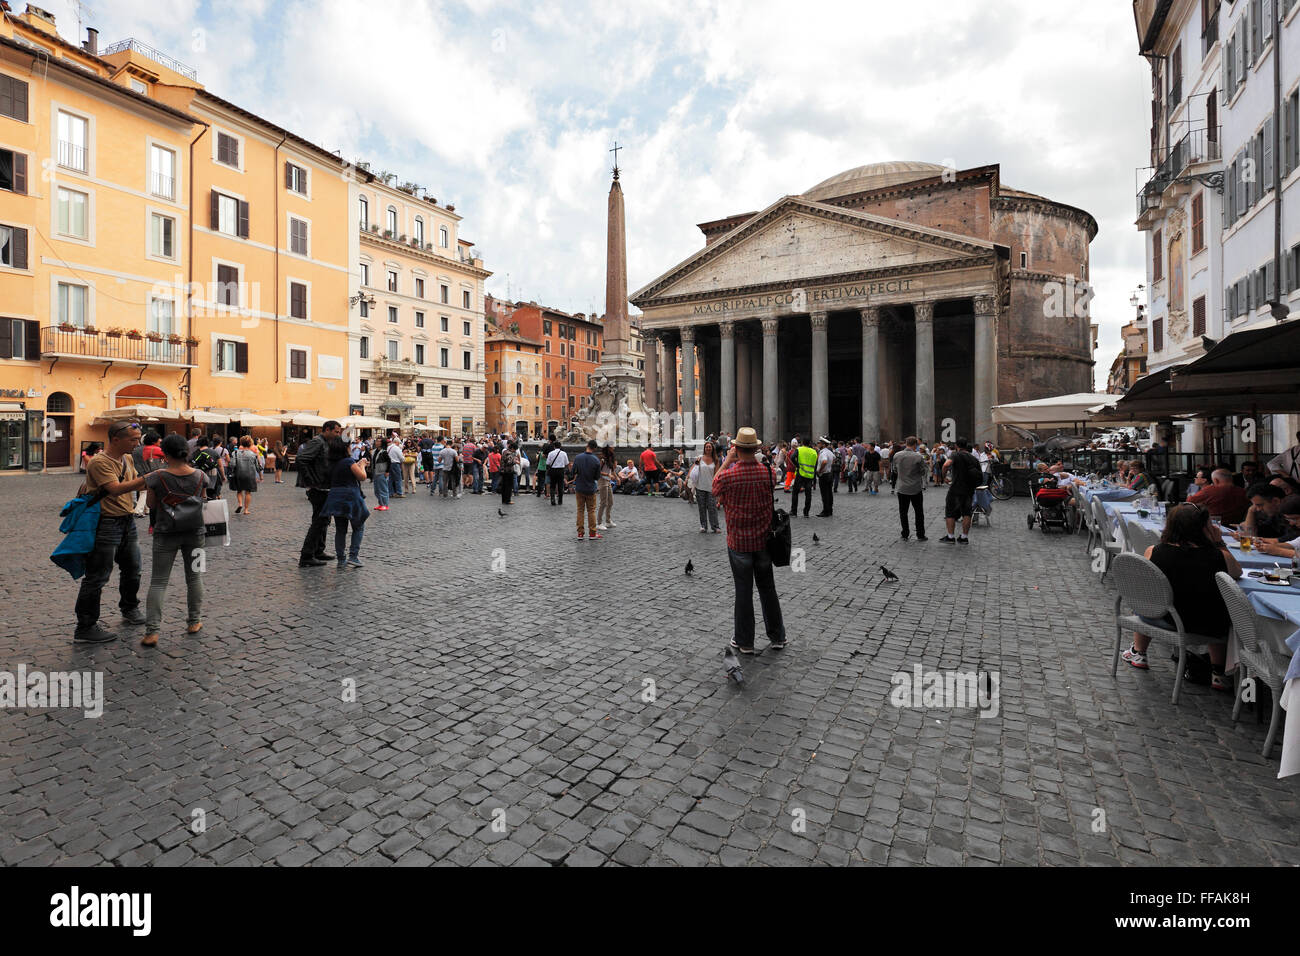 The Pantheon and the Fontana del Pantheon on Piazza della Rotonda, Rome, Italy Stock Photo